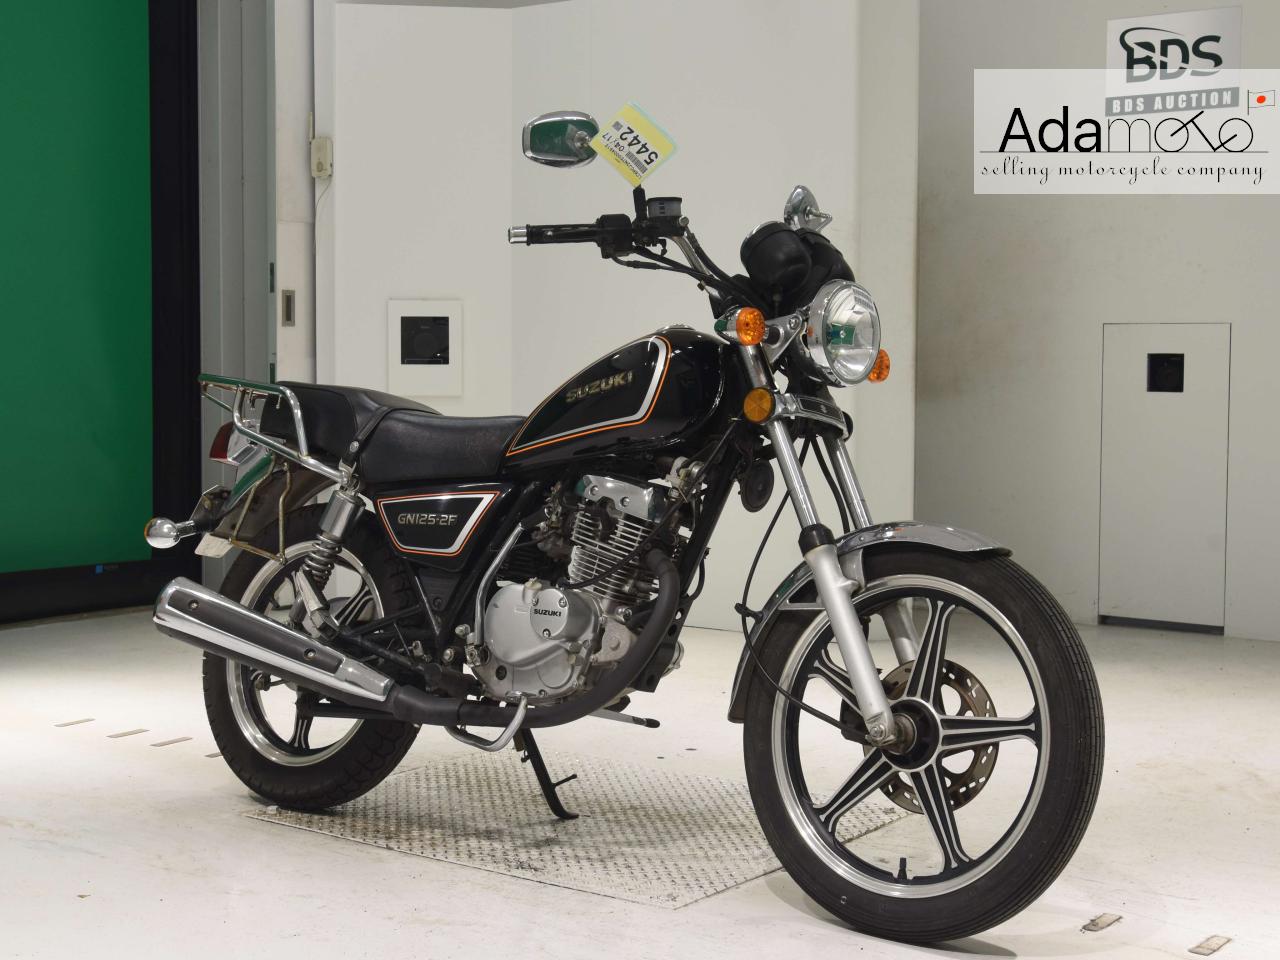 Suzuki GN125-2F - Adamoto - Motorcycles from Japan